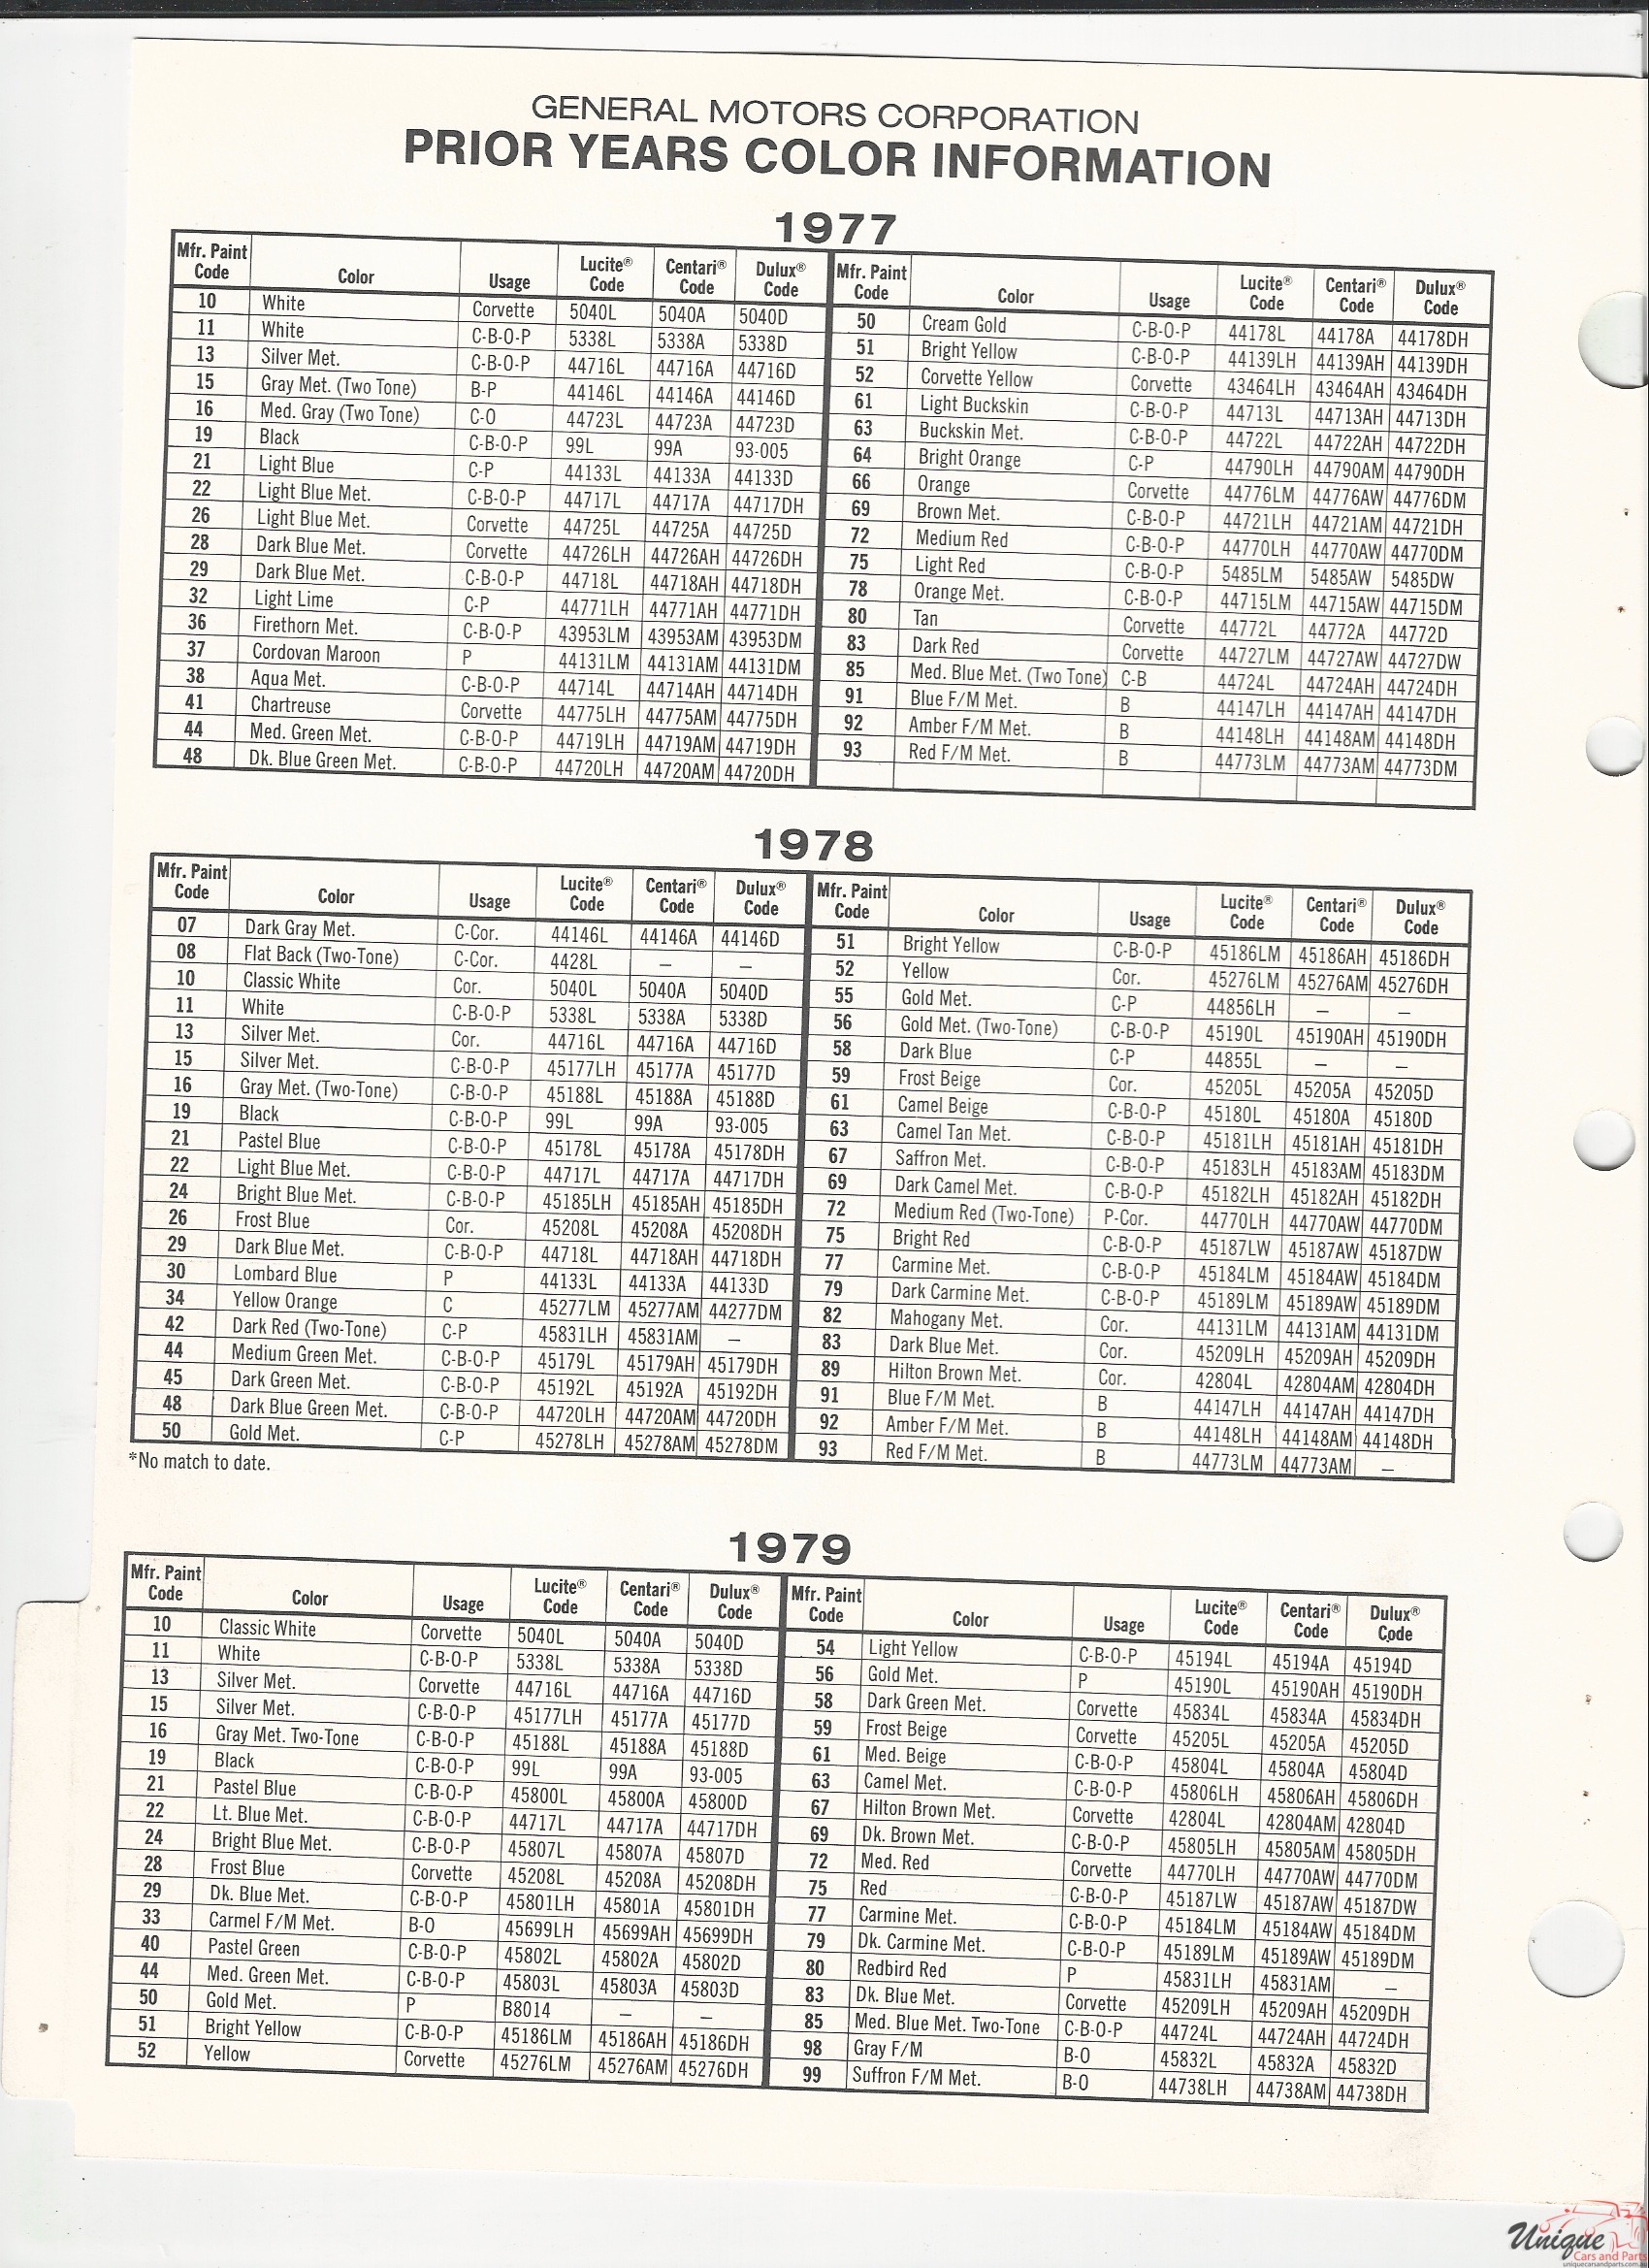 1980 GM-1 Paint Charts